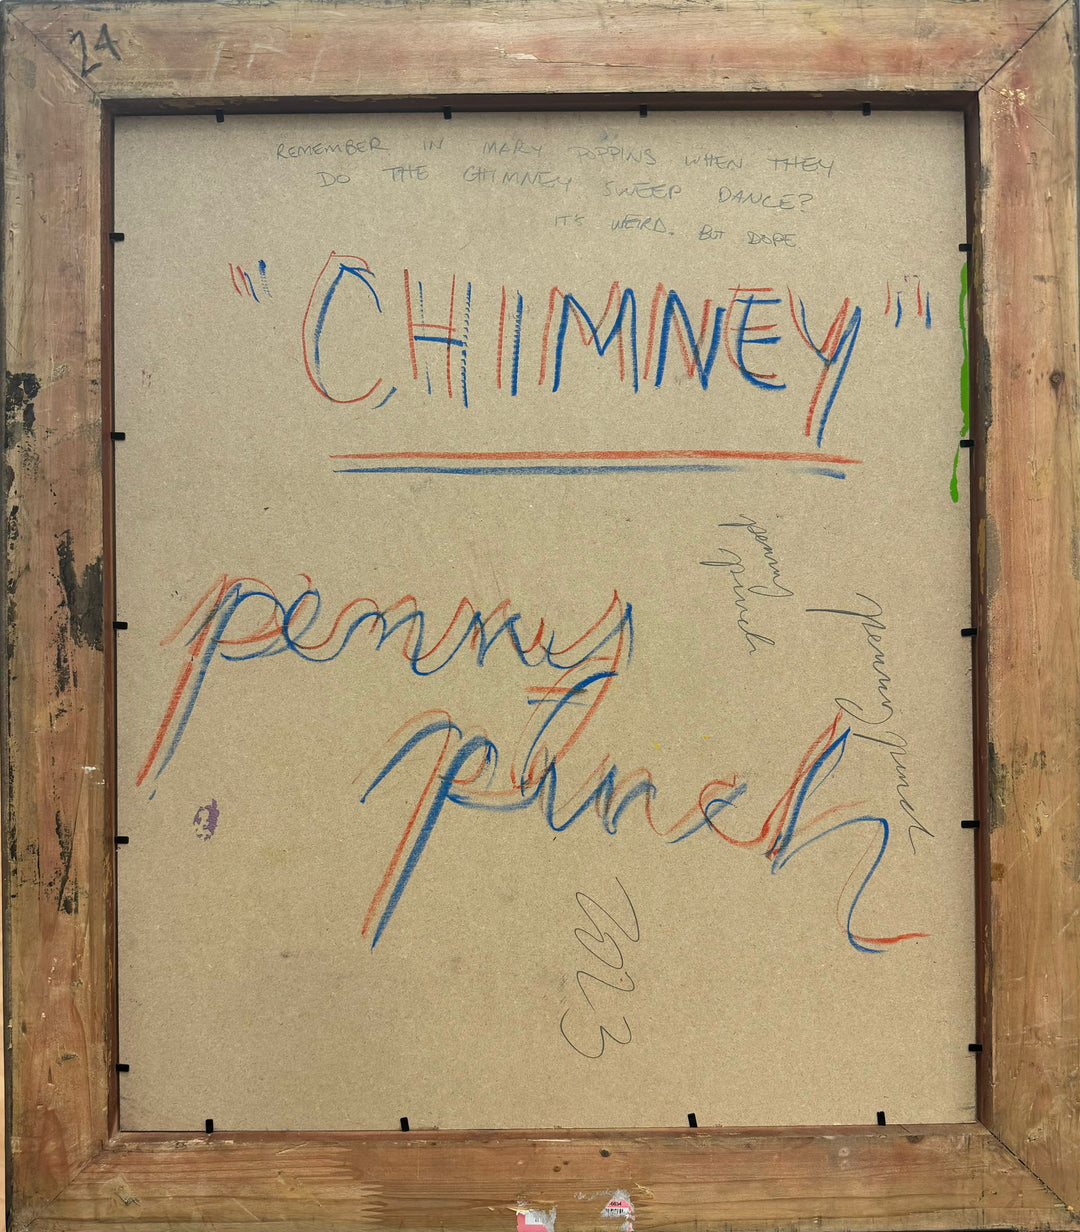 Painting 24: "Chimney"